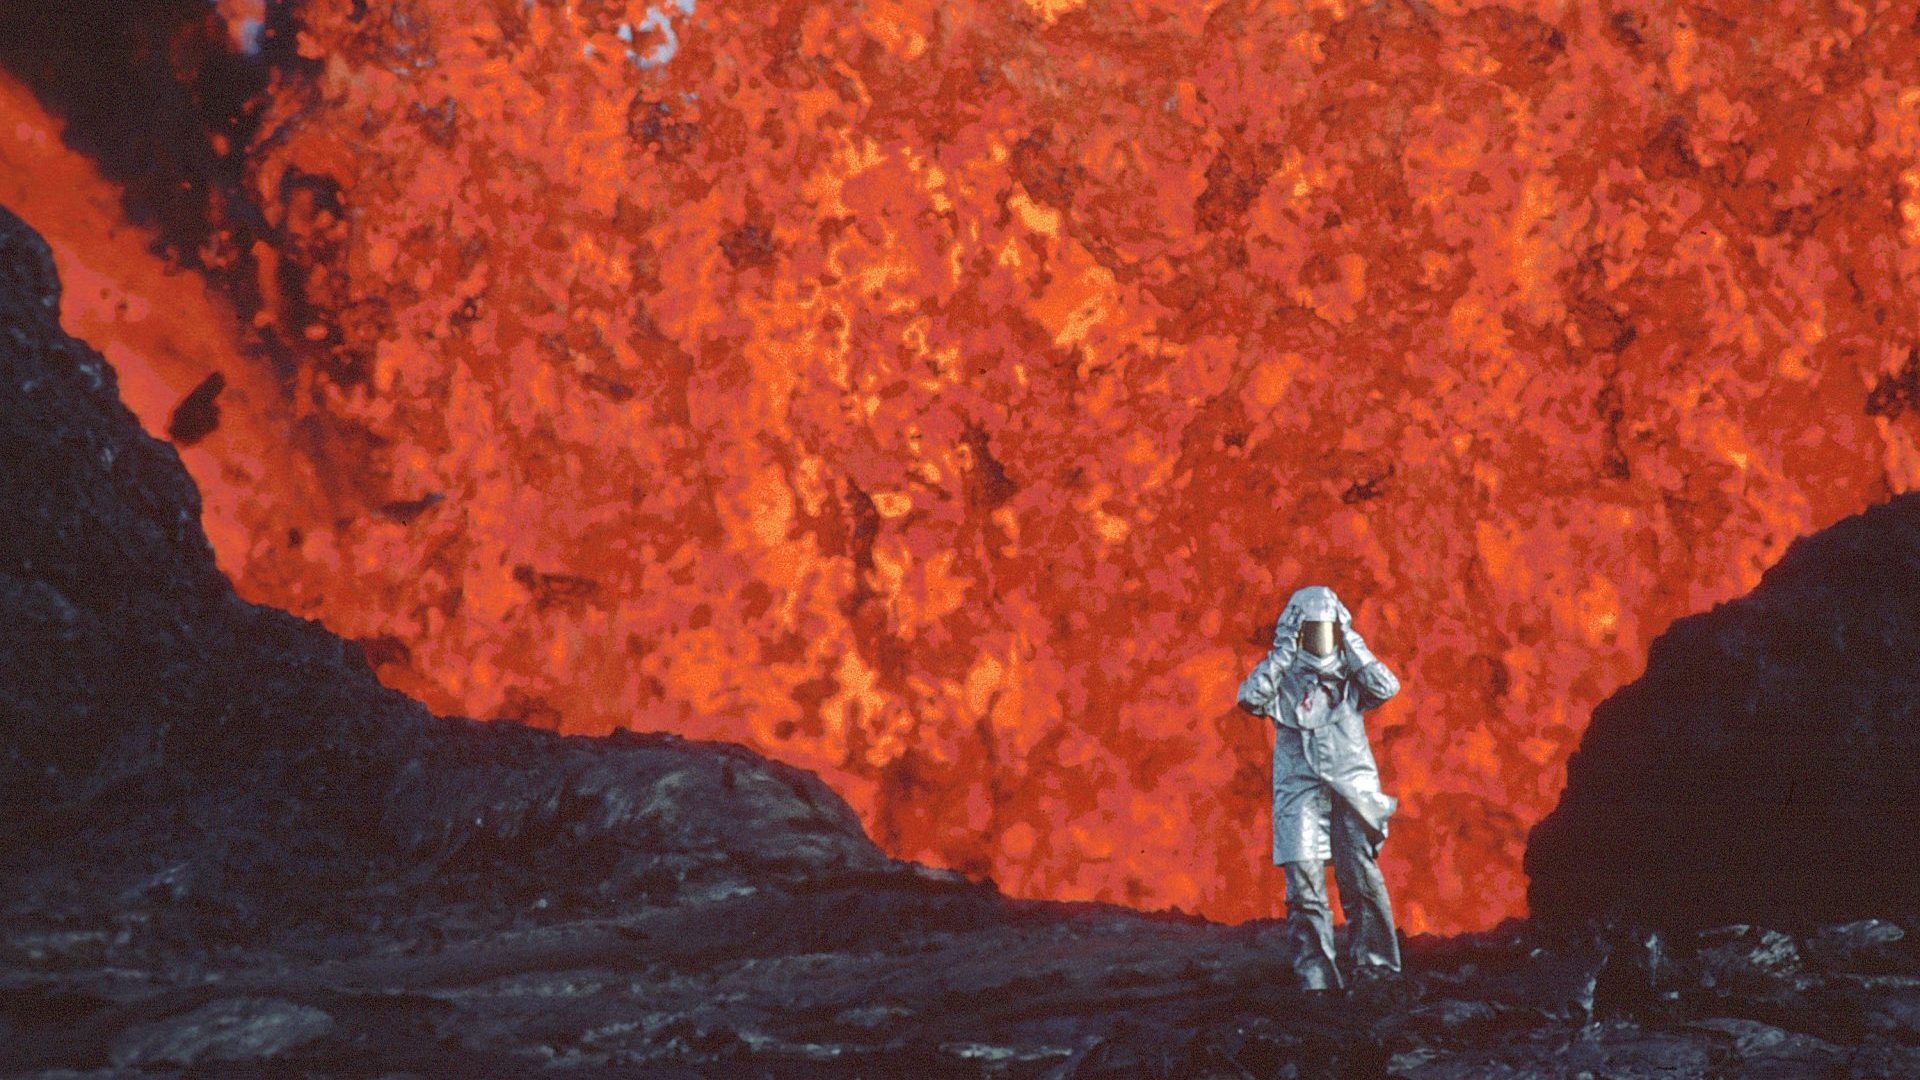 Katia Krafft wearing aluminized suit standing near lava burst at Krafla Volcano, Iceland. Photo: Image'Est
